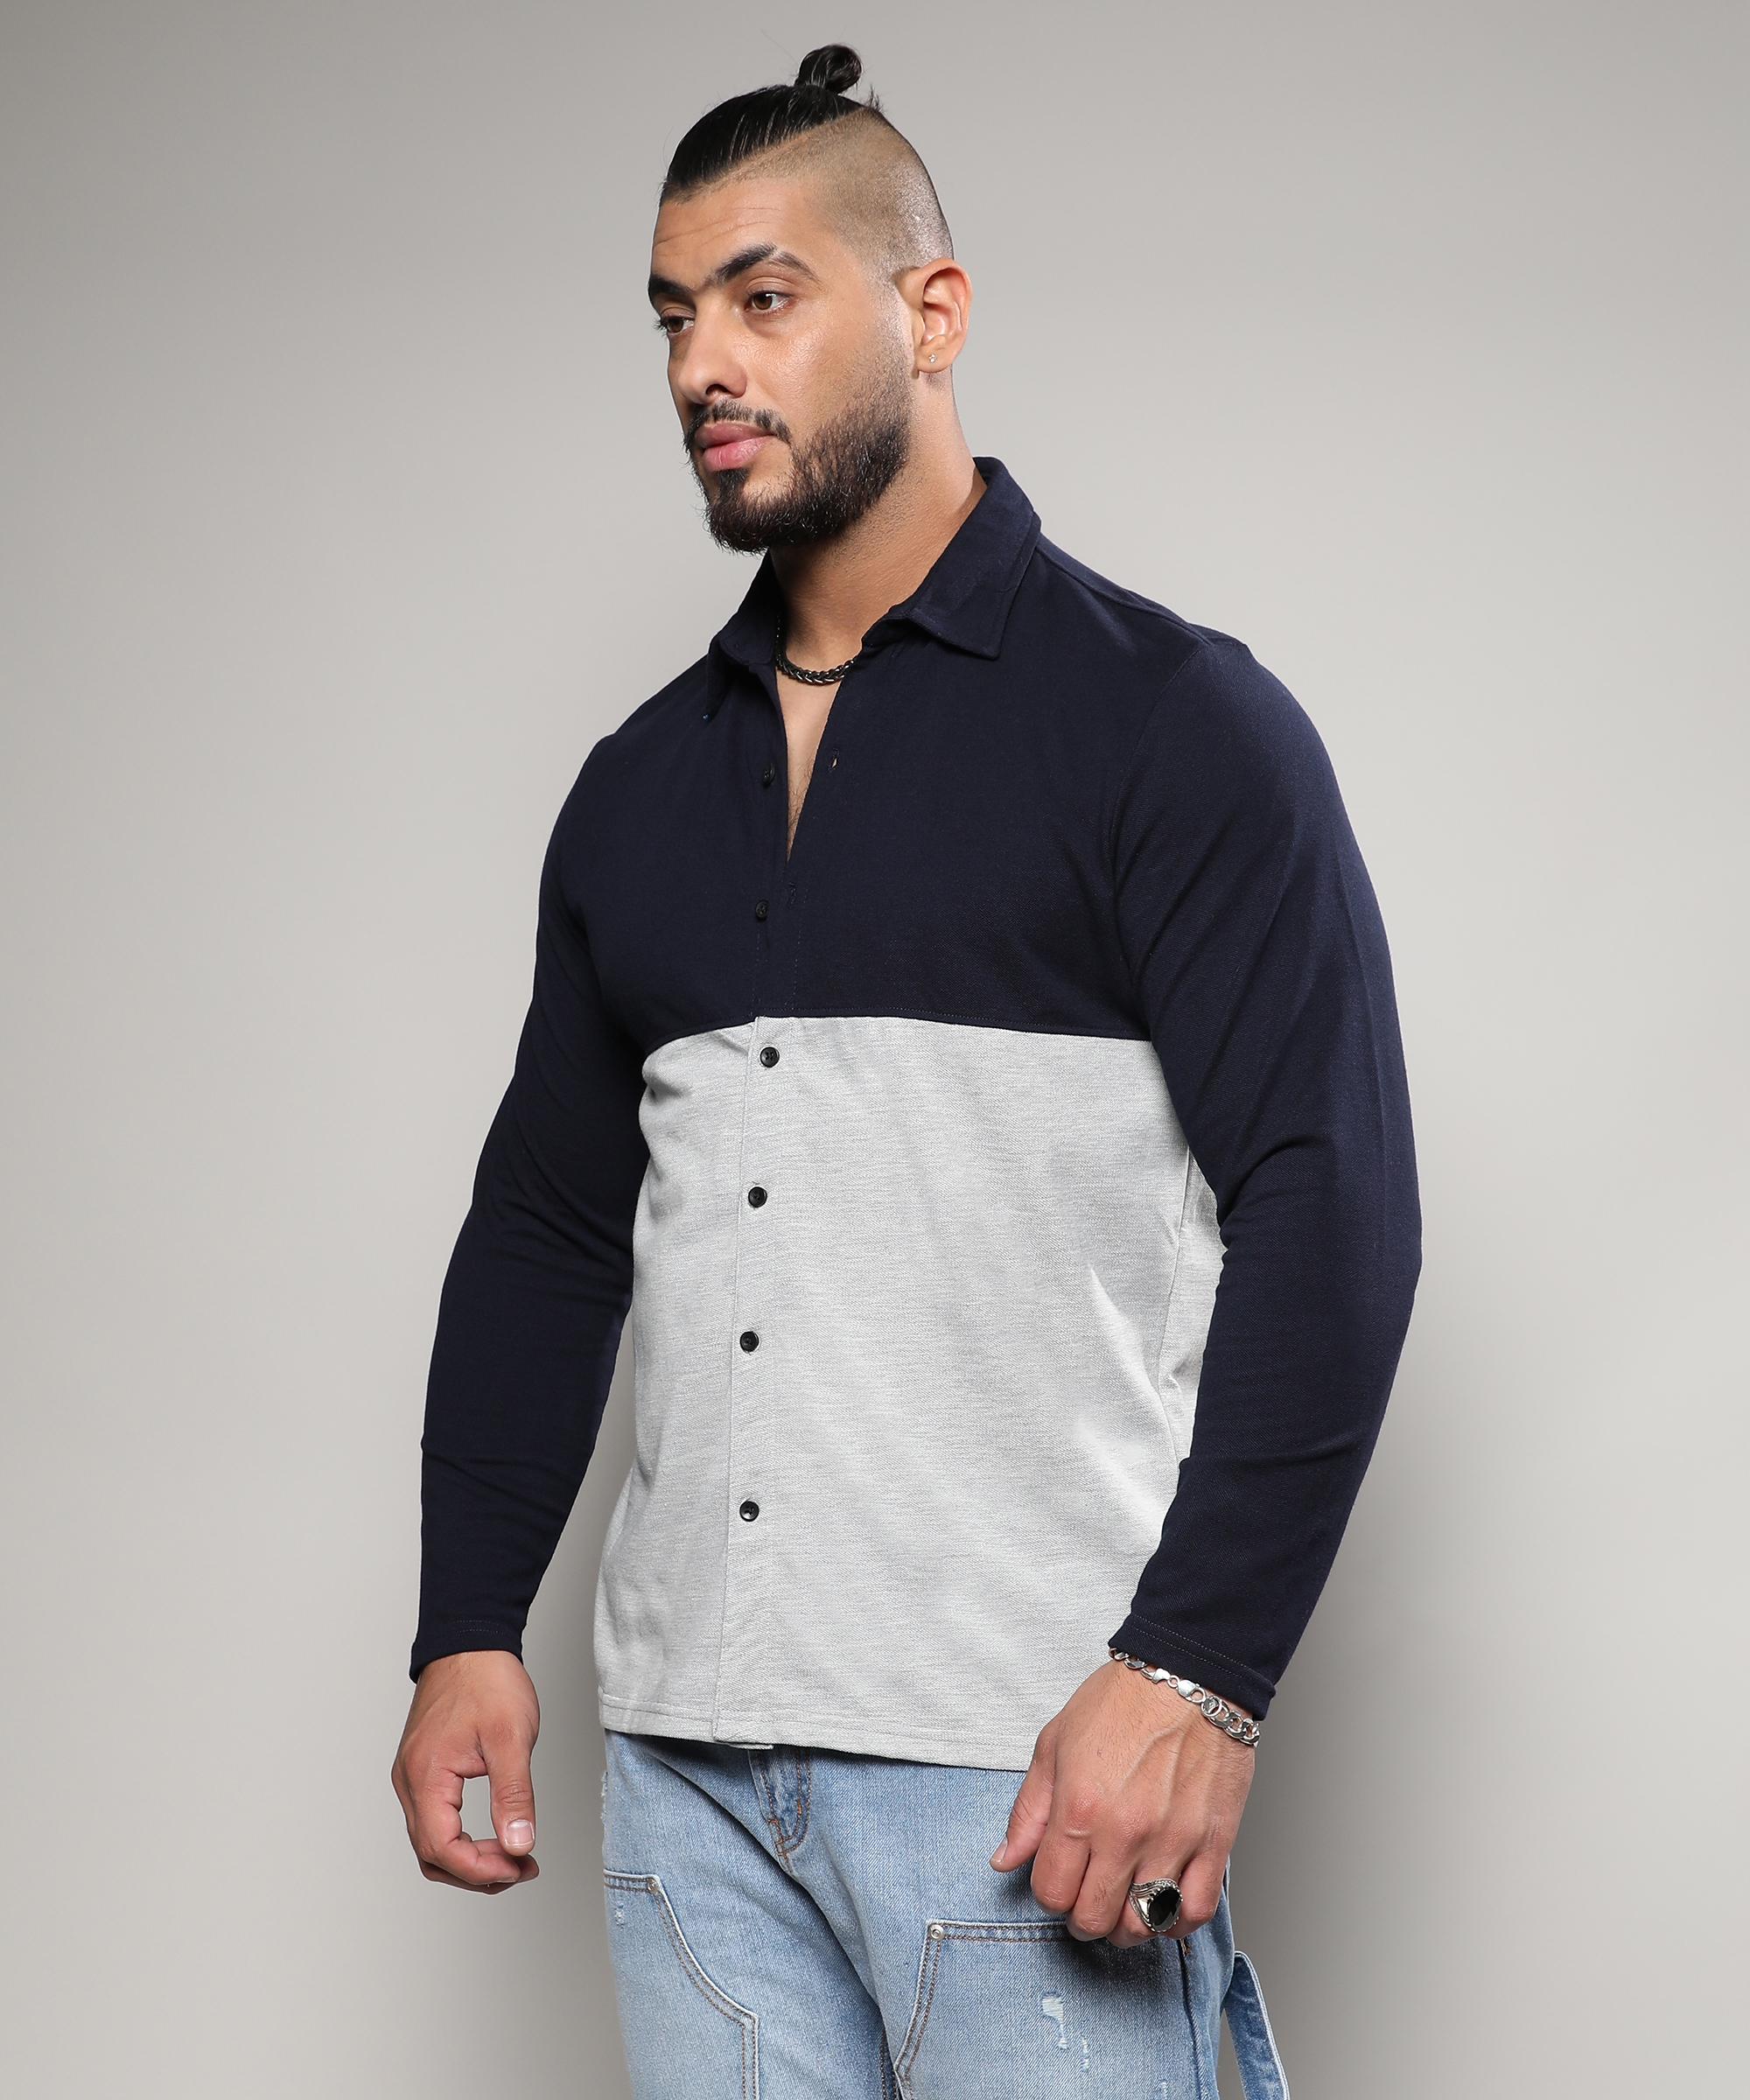 Men's Navy Blue & Light Grey Contrast Panel Shirt